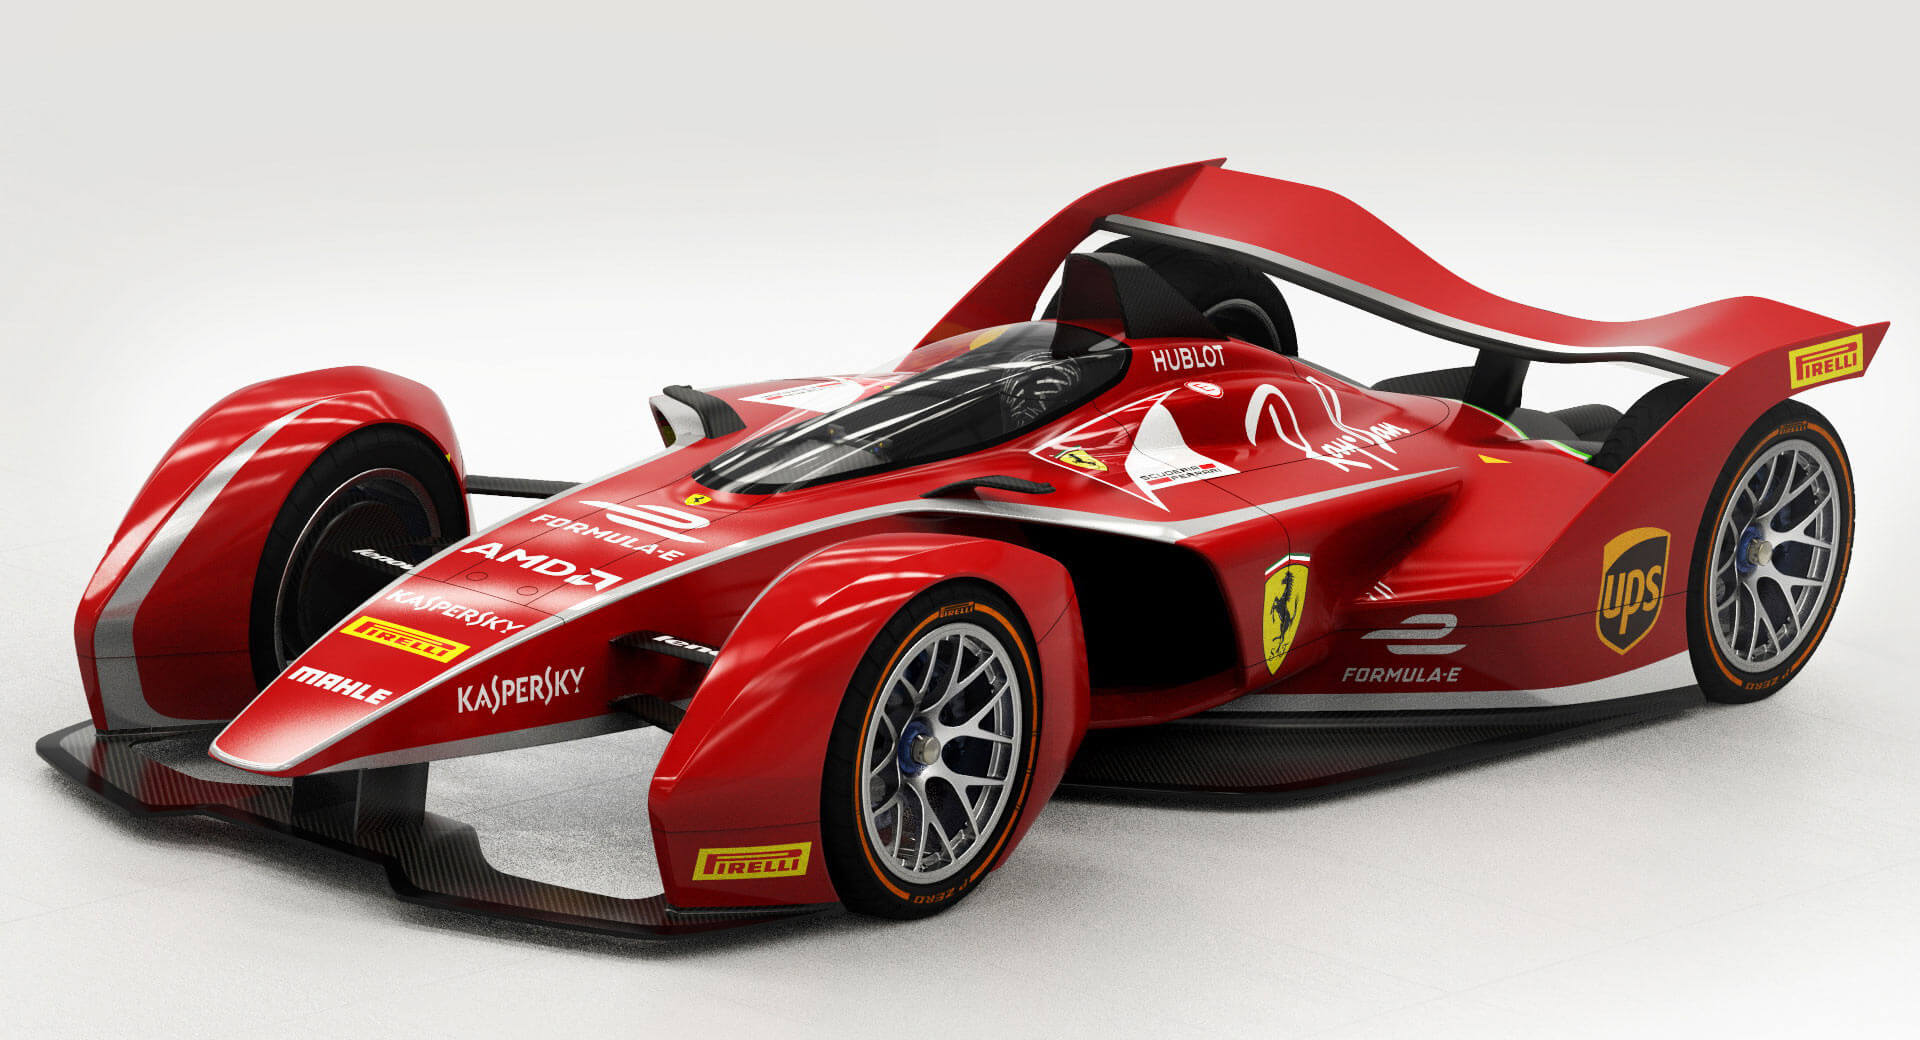 Should Ferrari go to IndyCar?